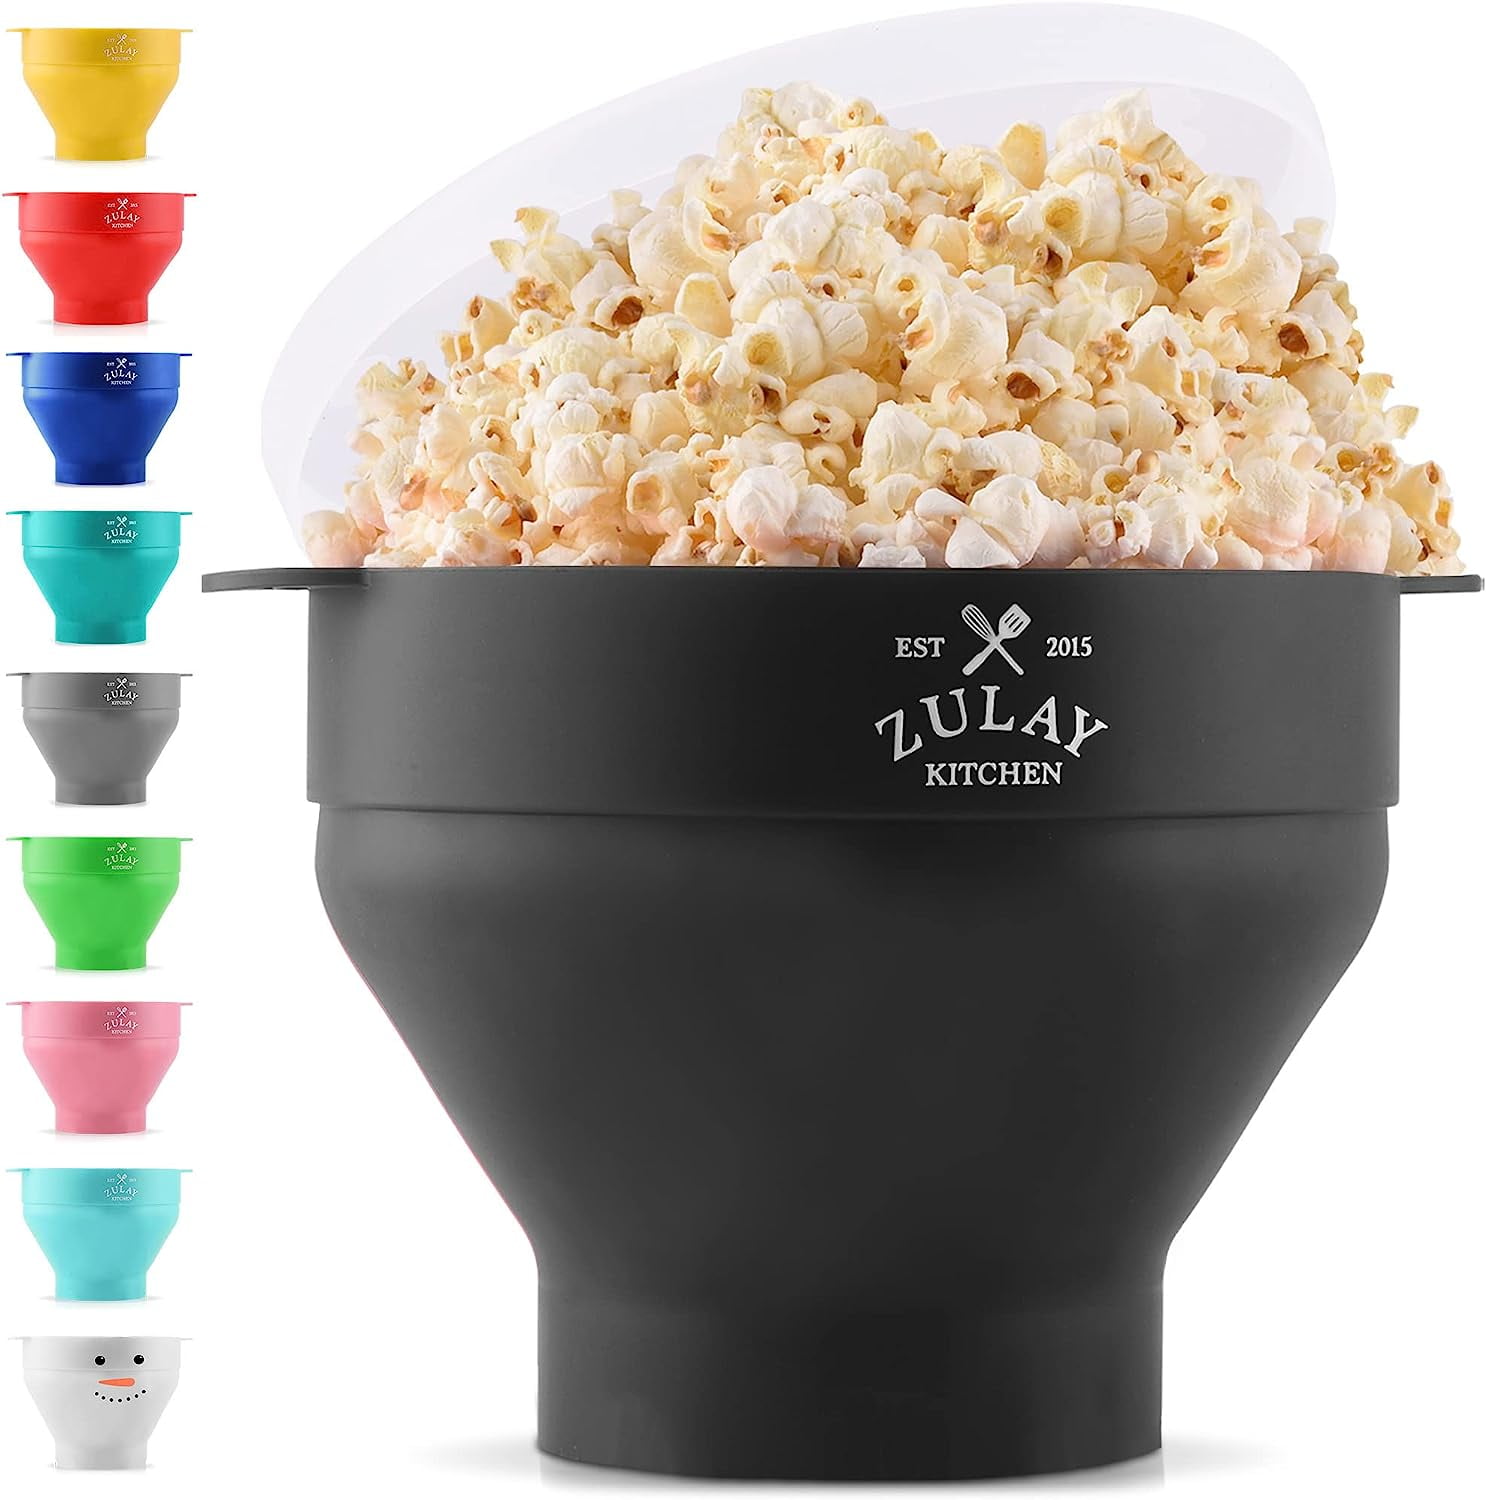 BillionPool POP-A Popcorn Machine, 1200W Popcorn Maker, BPA-Free